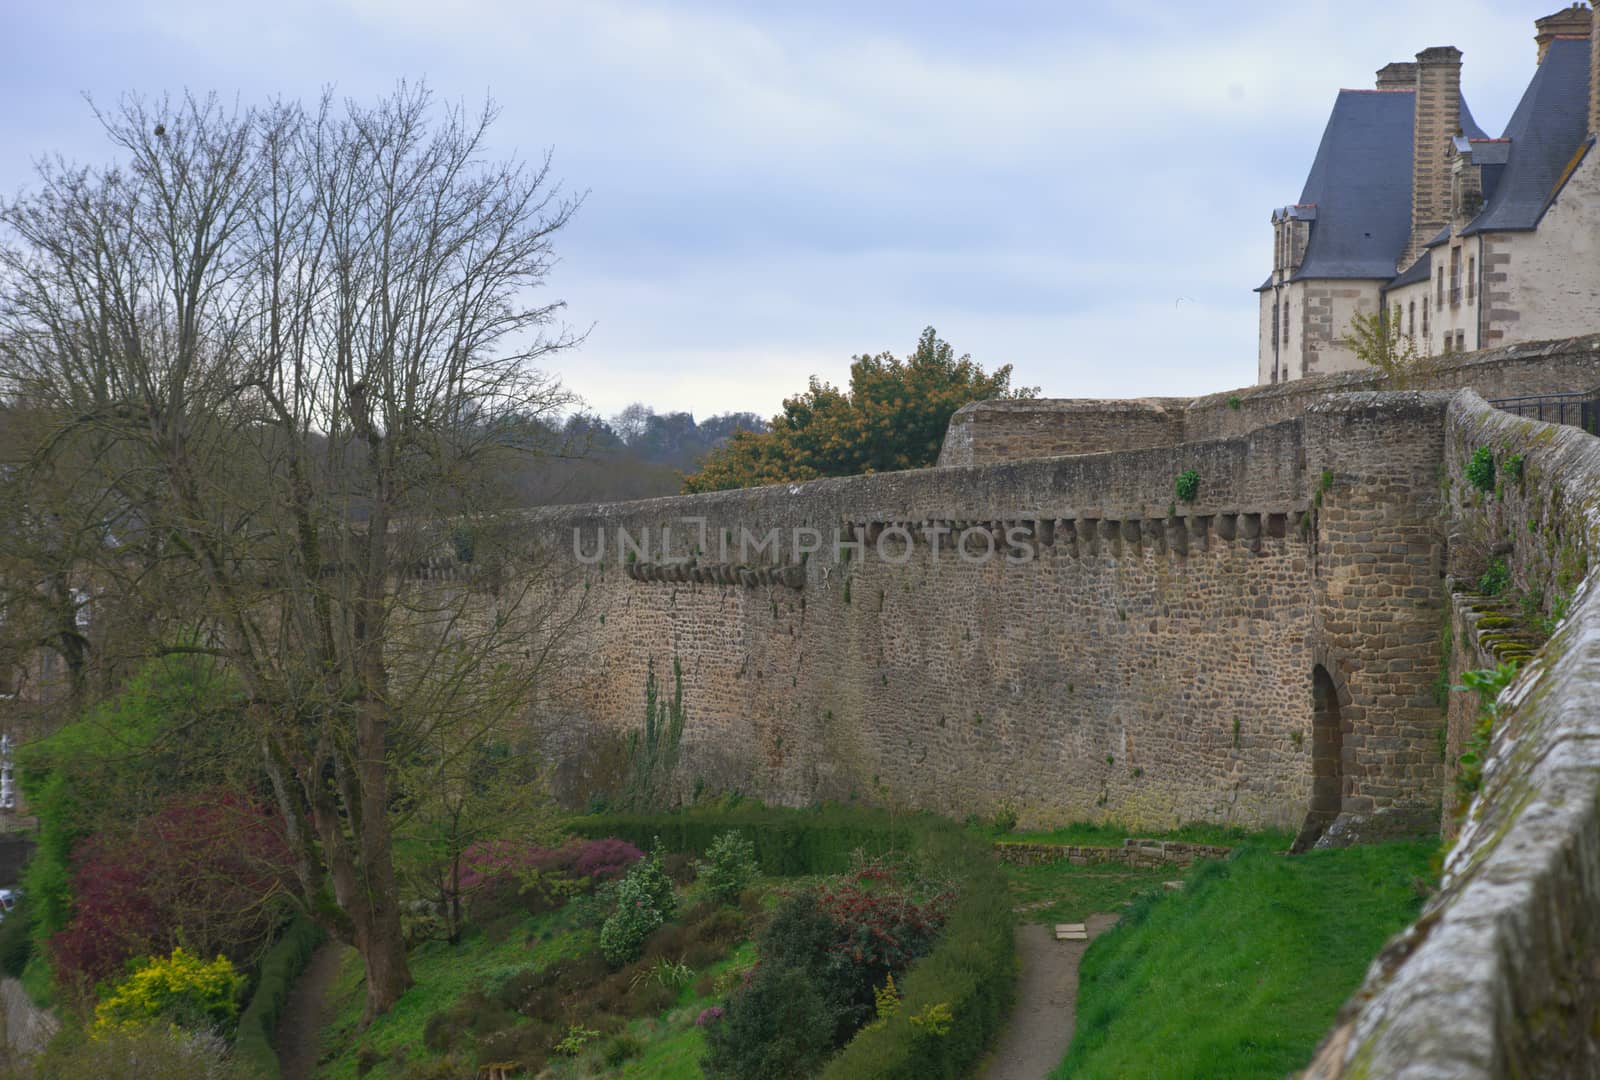 View on huge stone walls at Dinan fortress, France